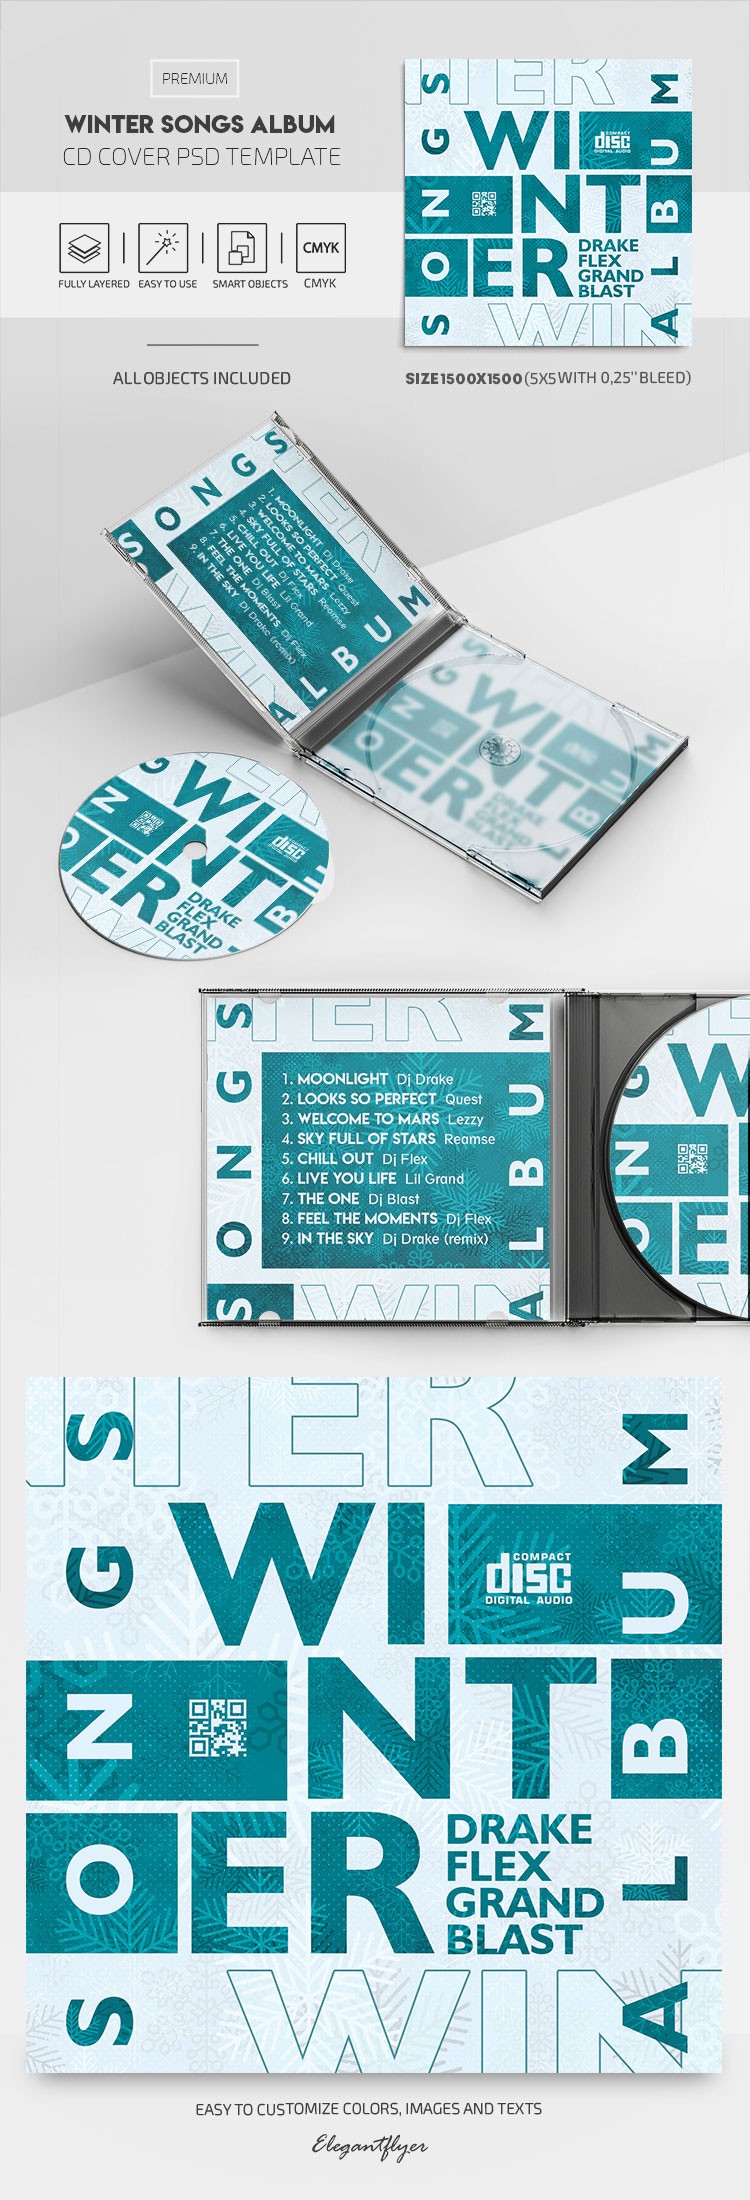 Copertina dell'album "Winter Songs" su CD by ElegantFlyer